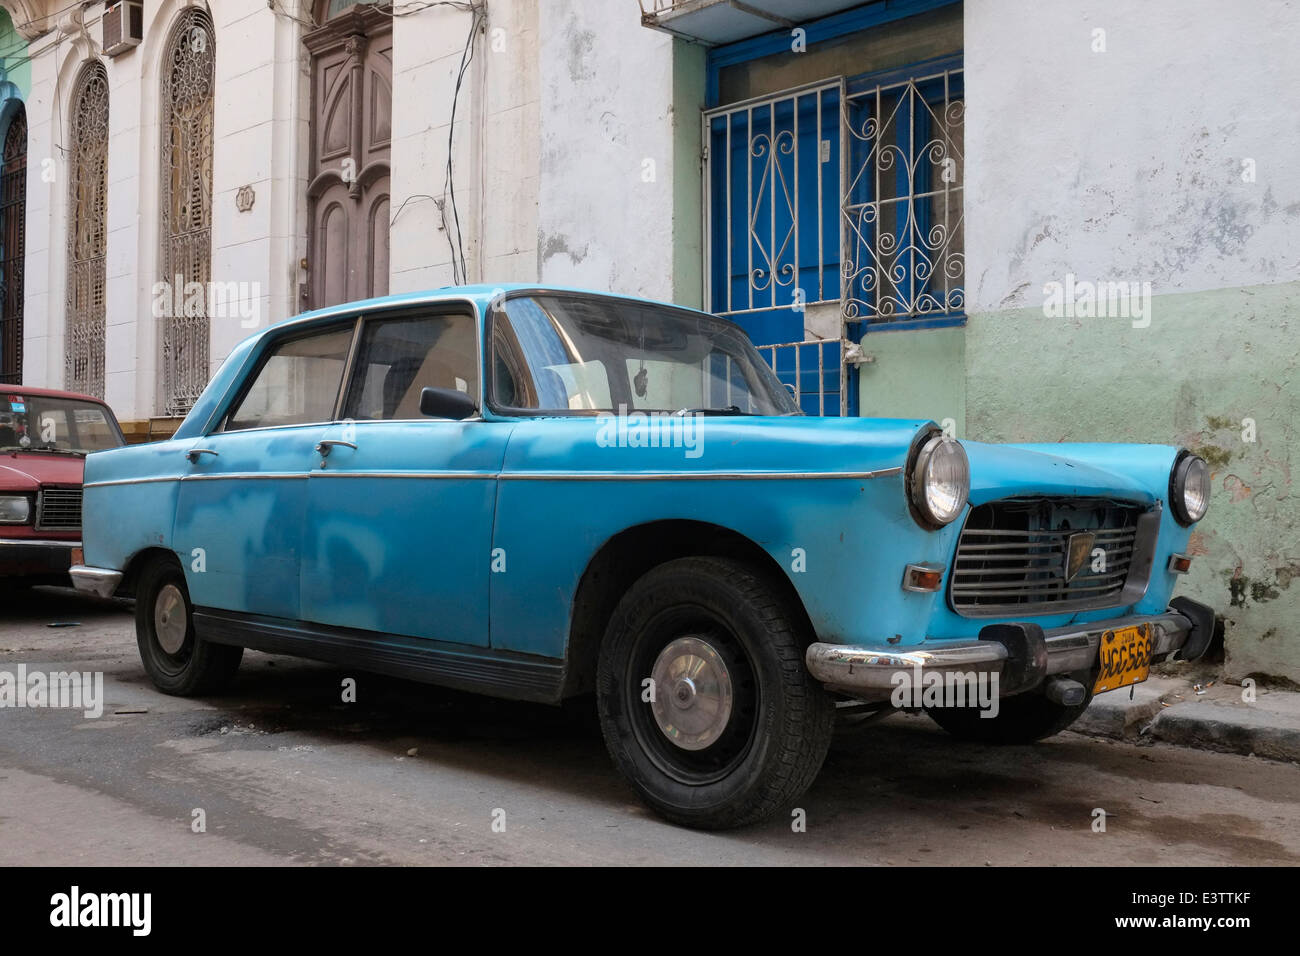 An old Peugeot car in Old Havana, Cuba. Stock Photo